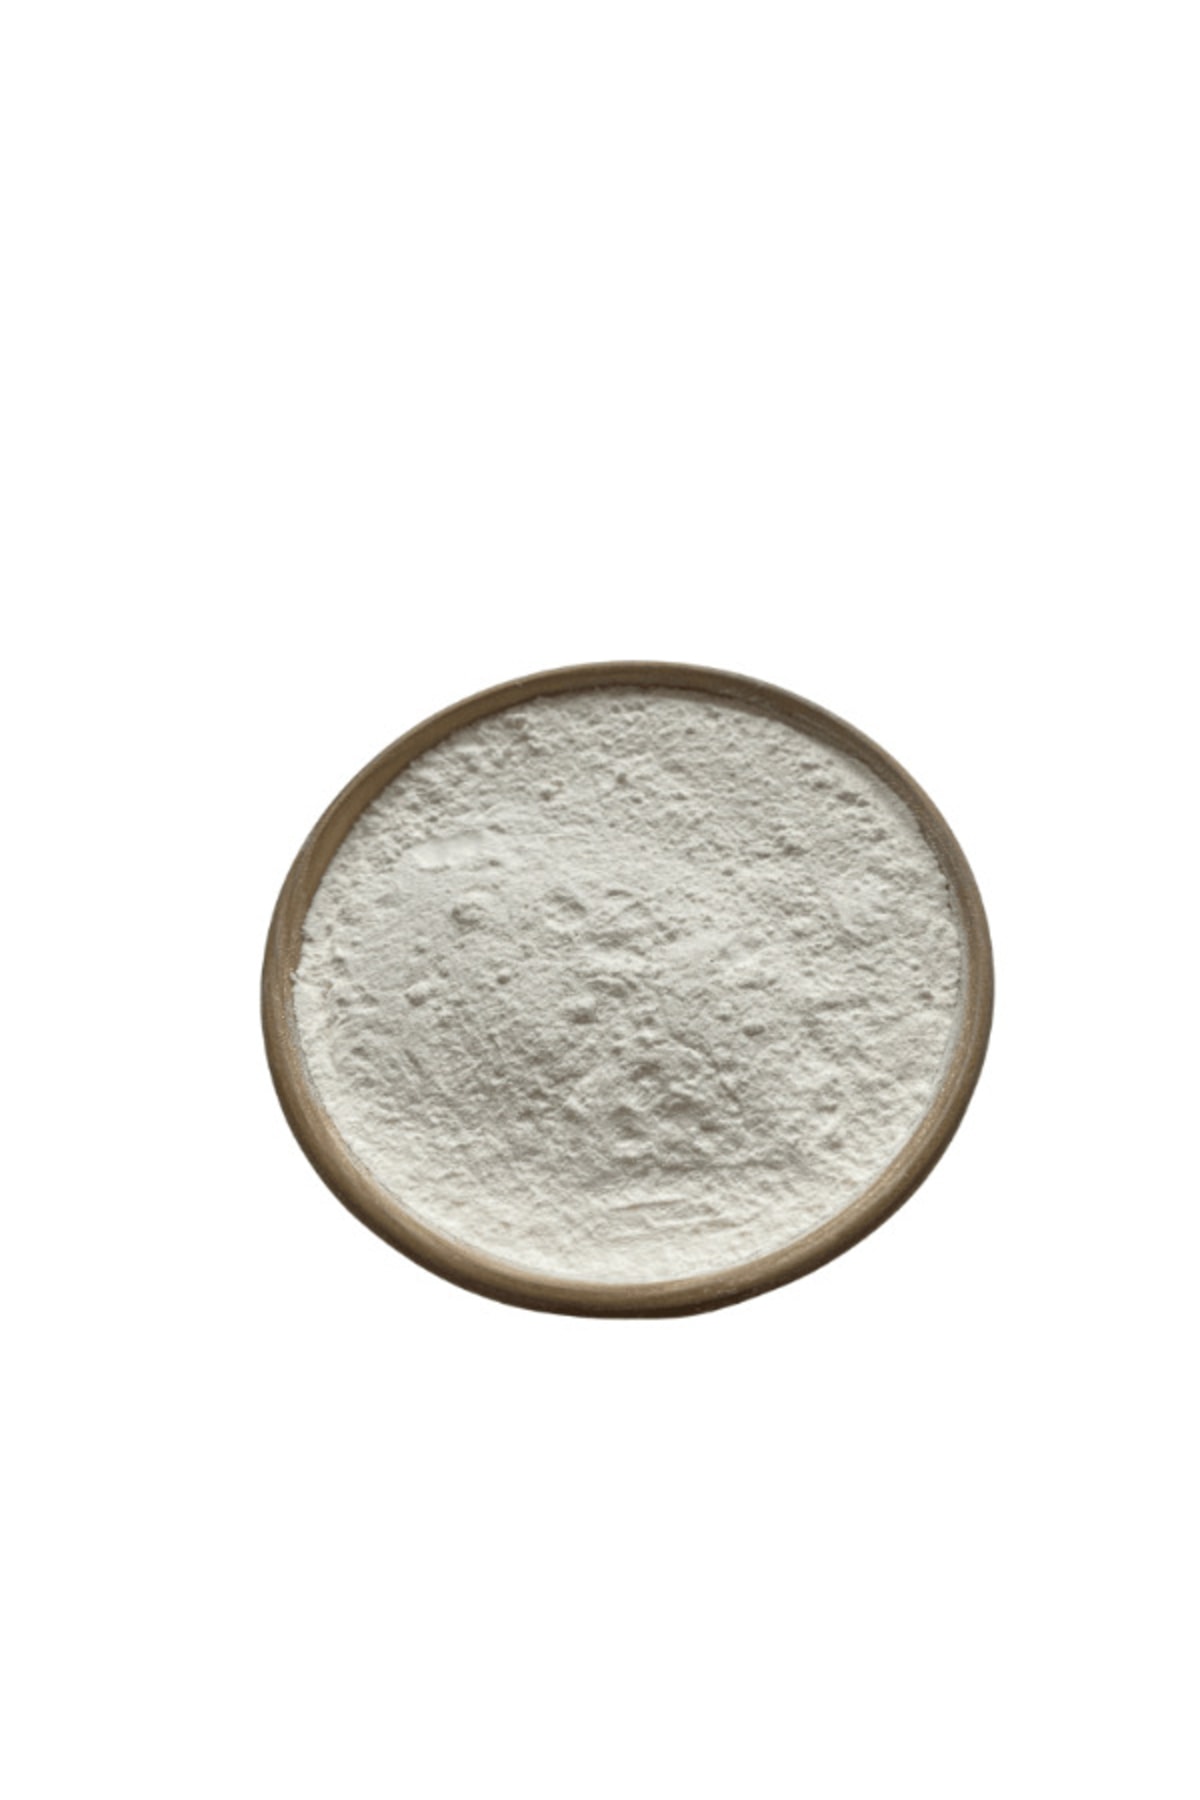 Kalipso Peyniraltı Suyu Tozu Protein Konsantresi Tozu Whey Protein(%36) 1kg